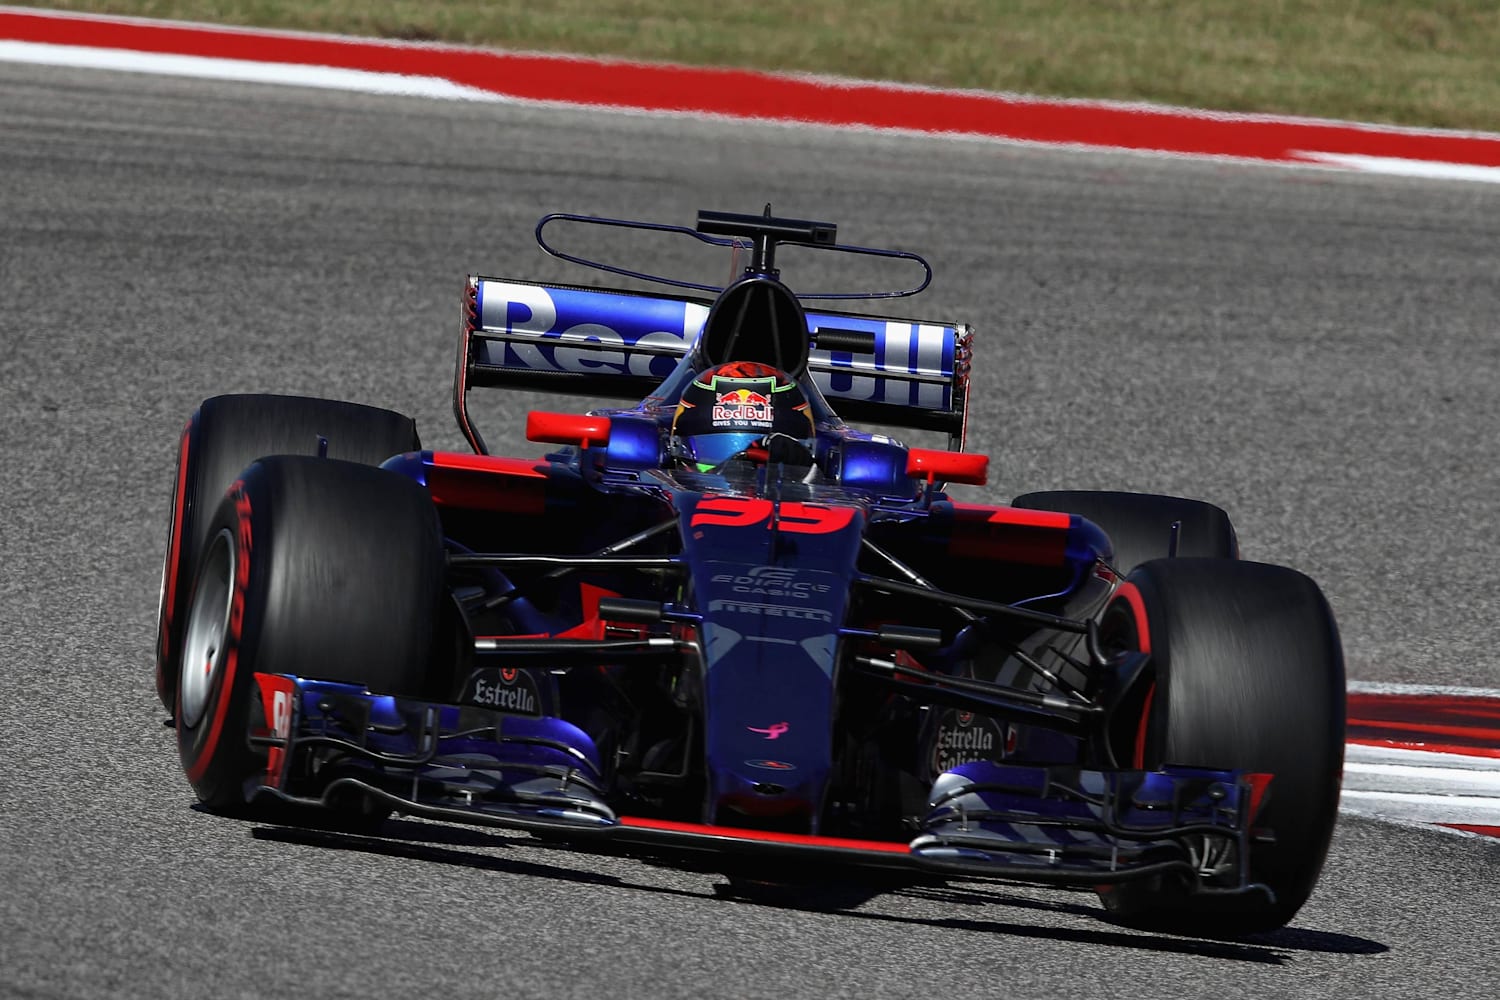 Brendon Hartley 13th in impressive Formula 1 debut